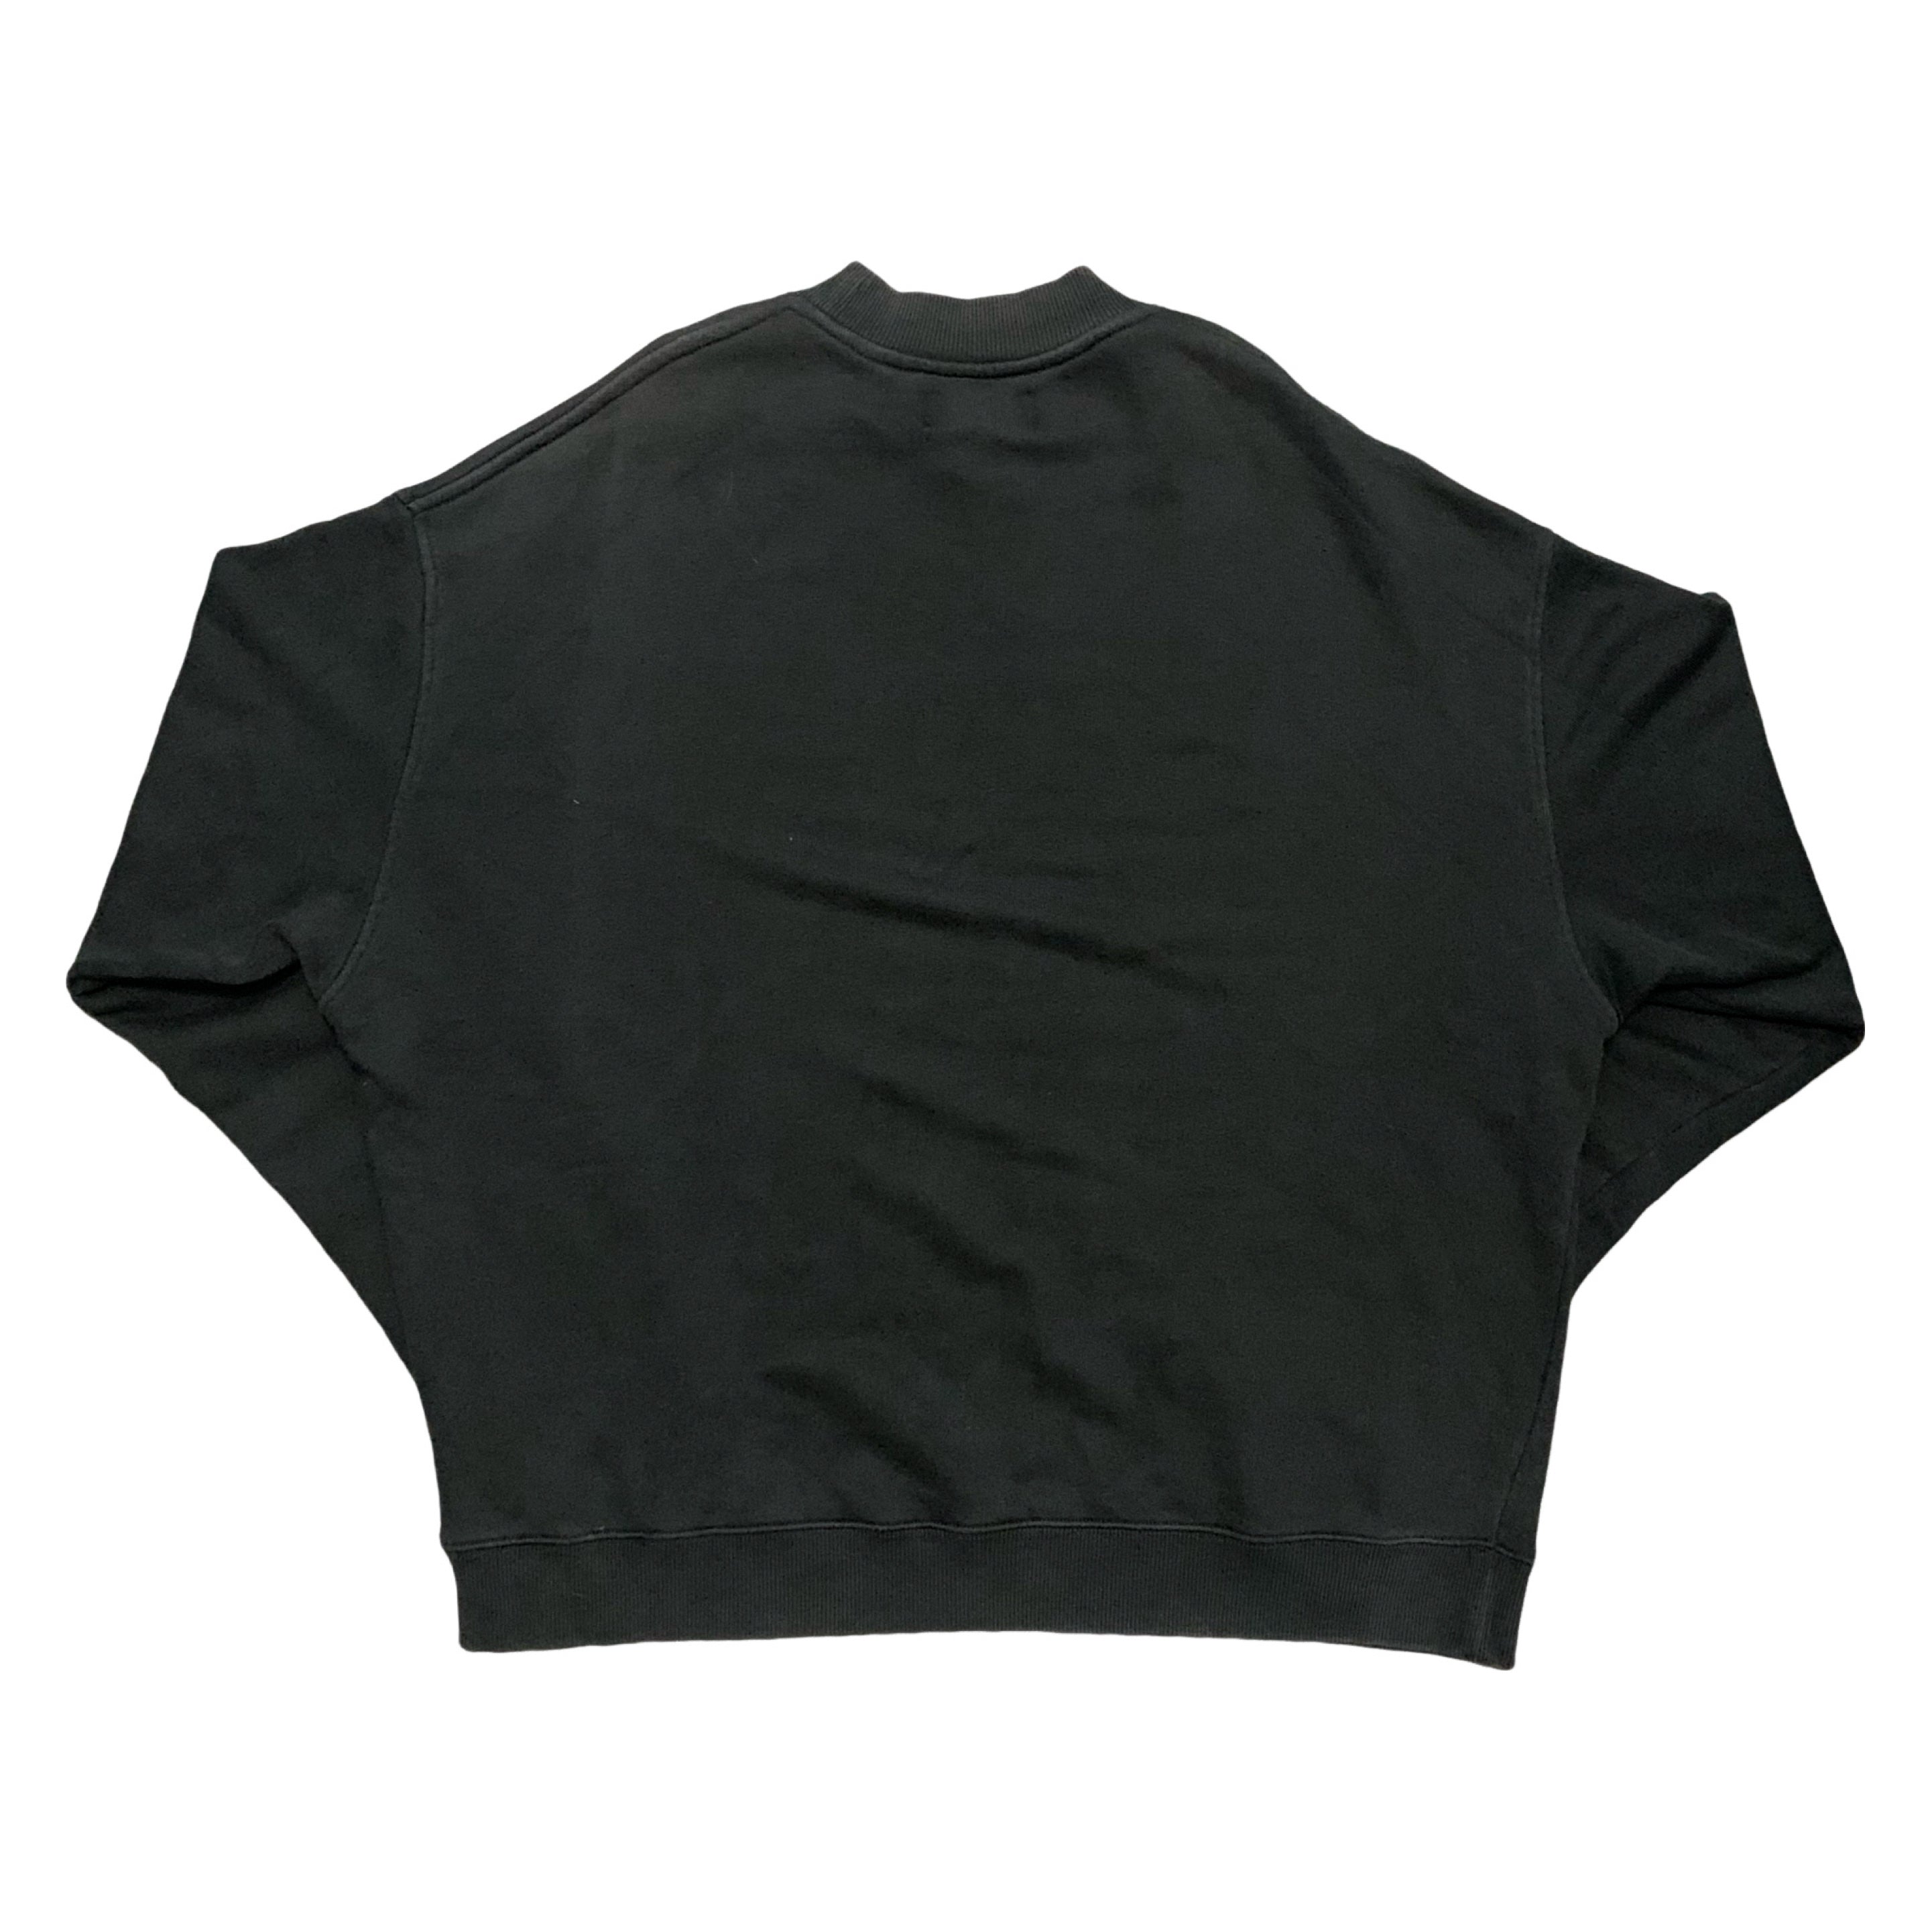 Represent Large Blanks Vintage Black Sweater Sweatshirt